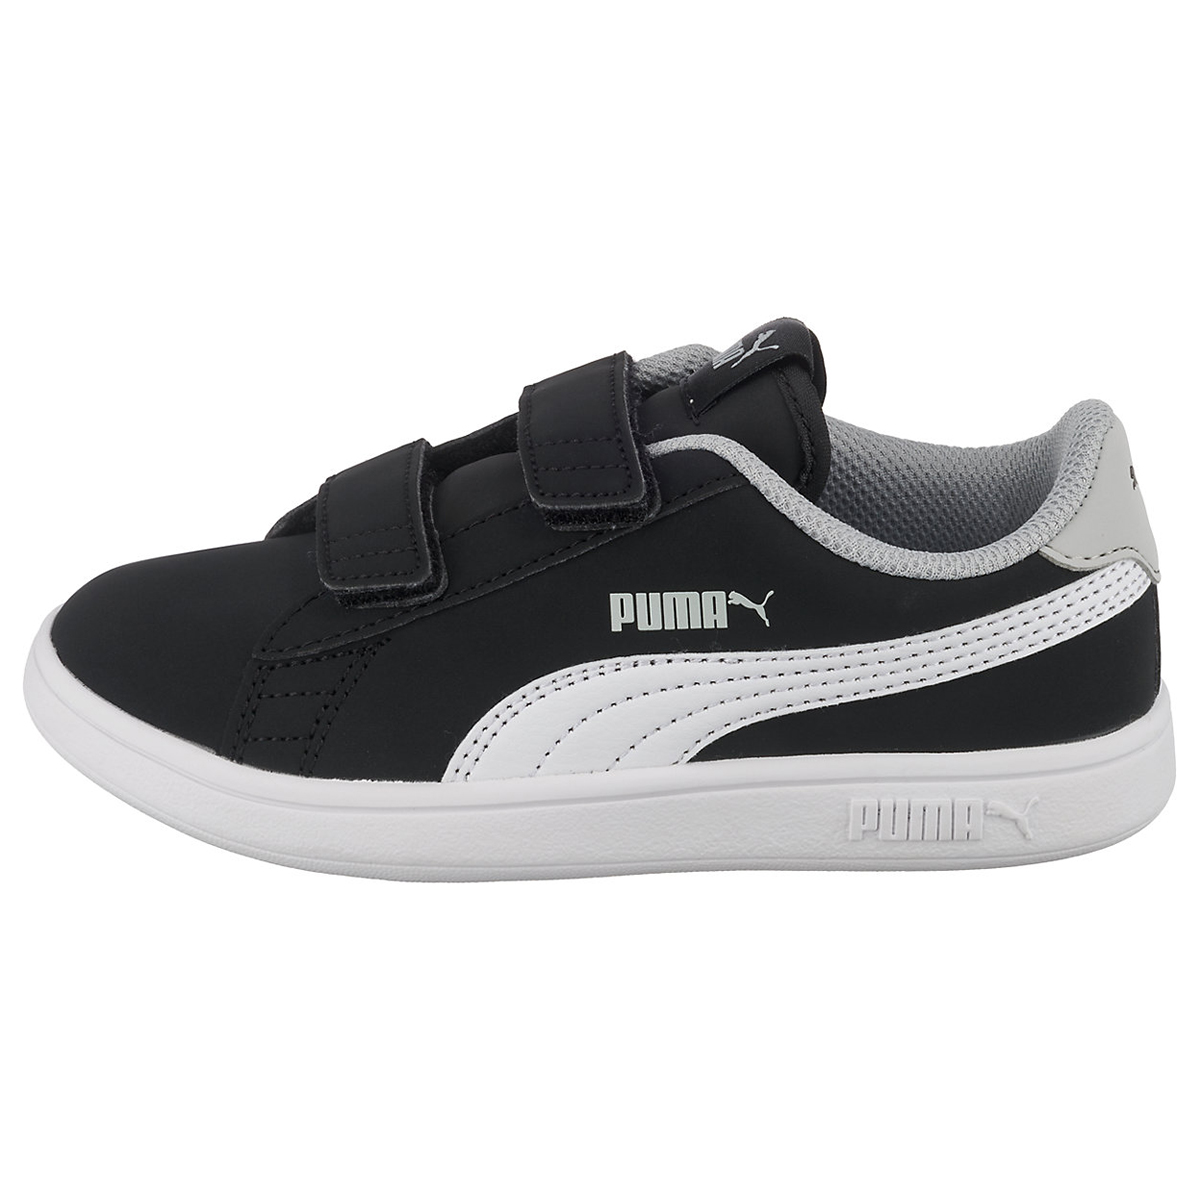 PUMA Smash v2 Buck V PS Kids Sneaker Schuhe schwarz 365183 14